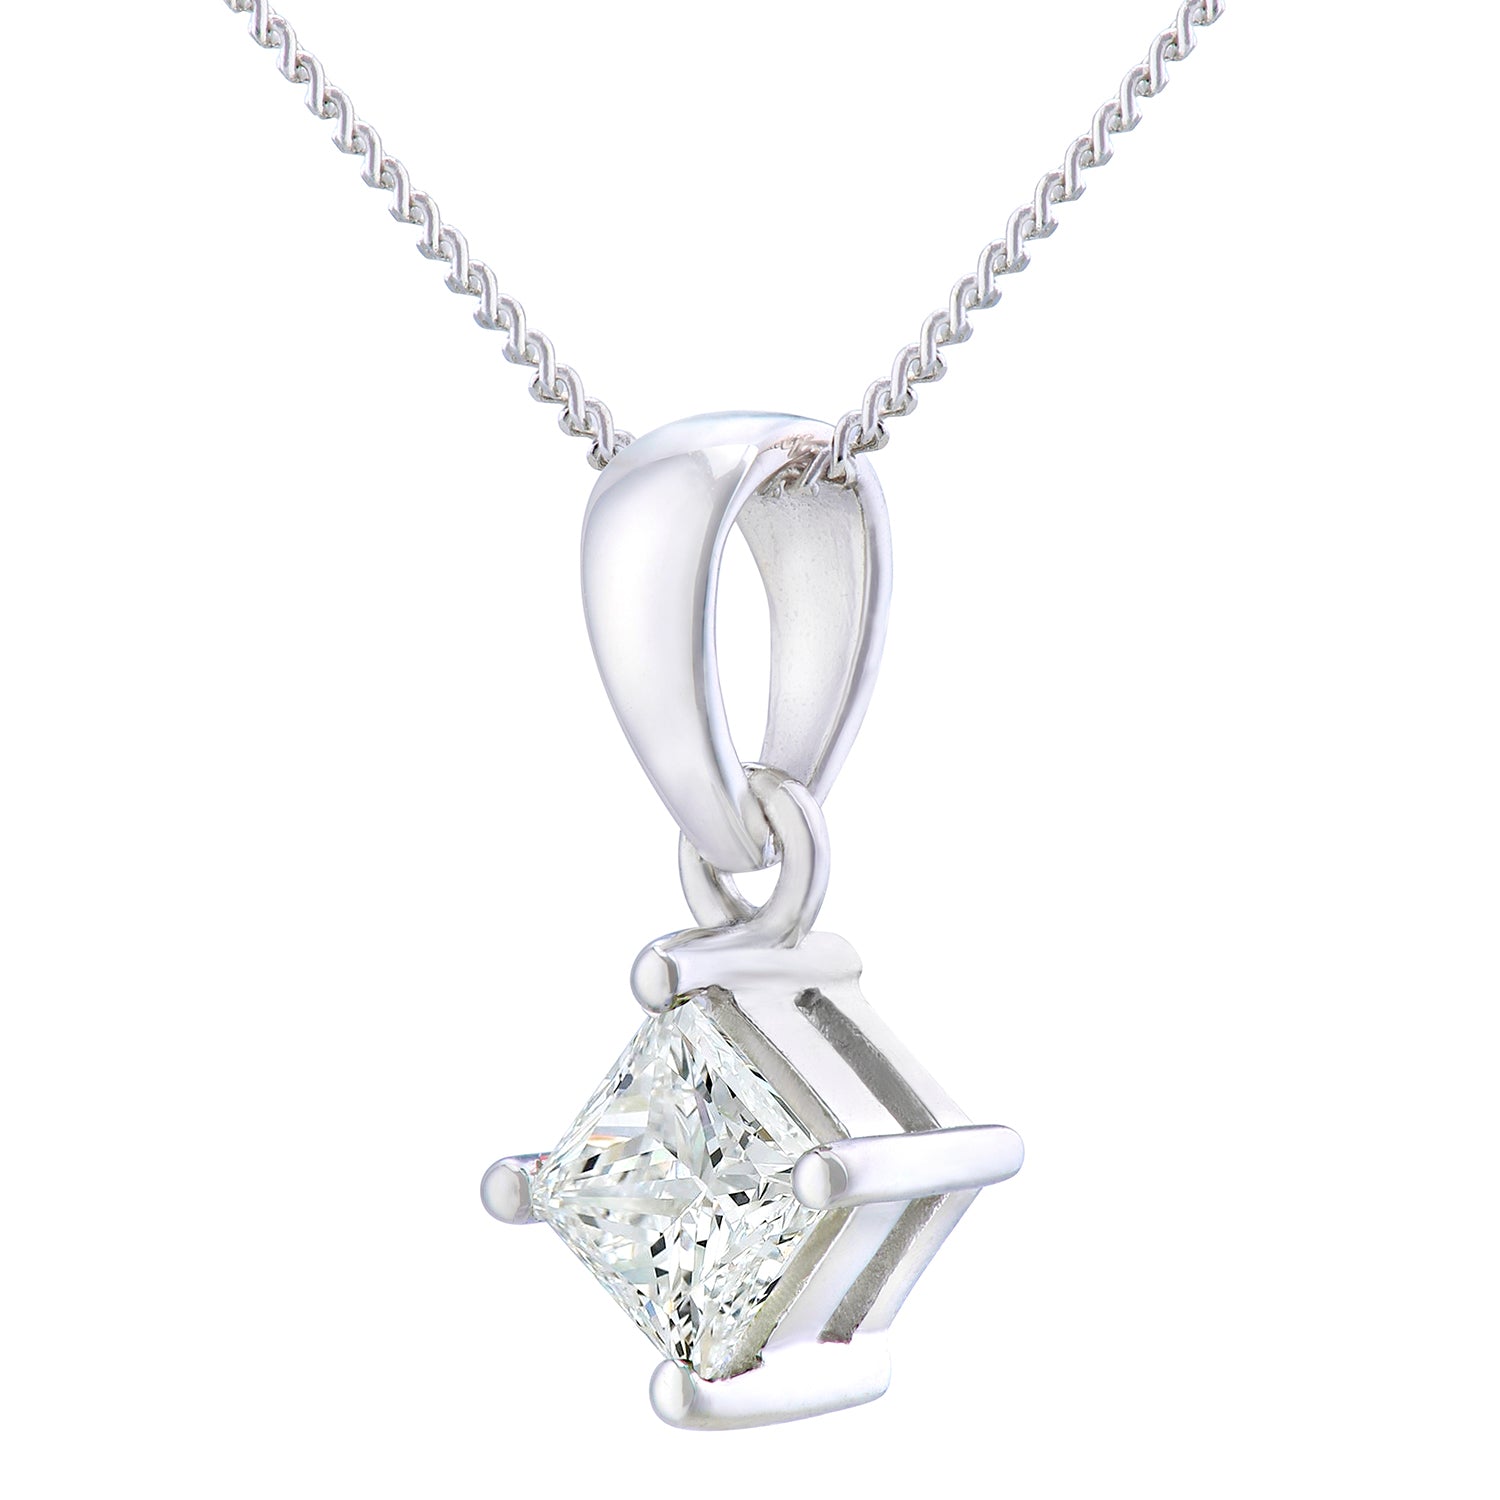 18ct White Gold  Princess 1/2ct Diamond Solitaire Necklace 18" - PP0AXL4837W18JSI